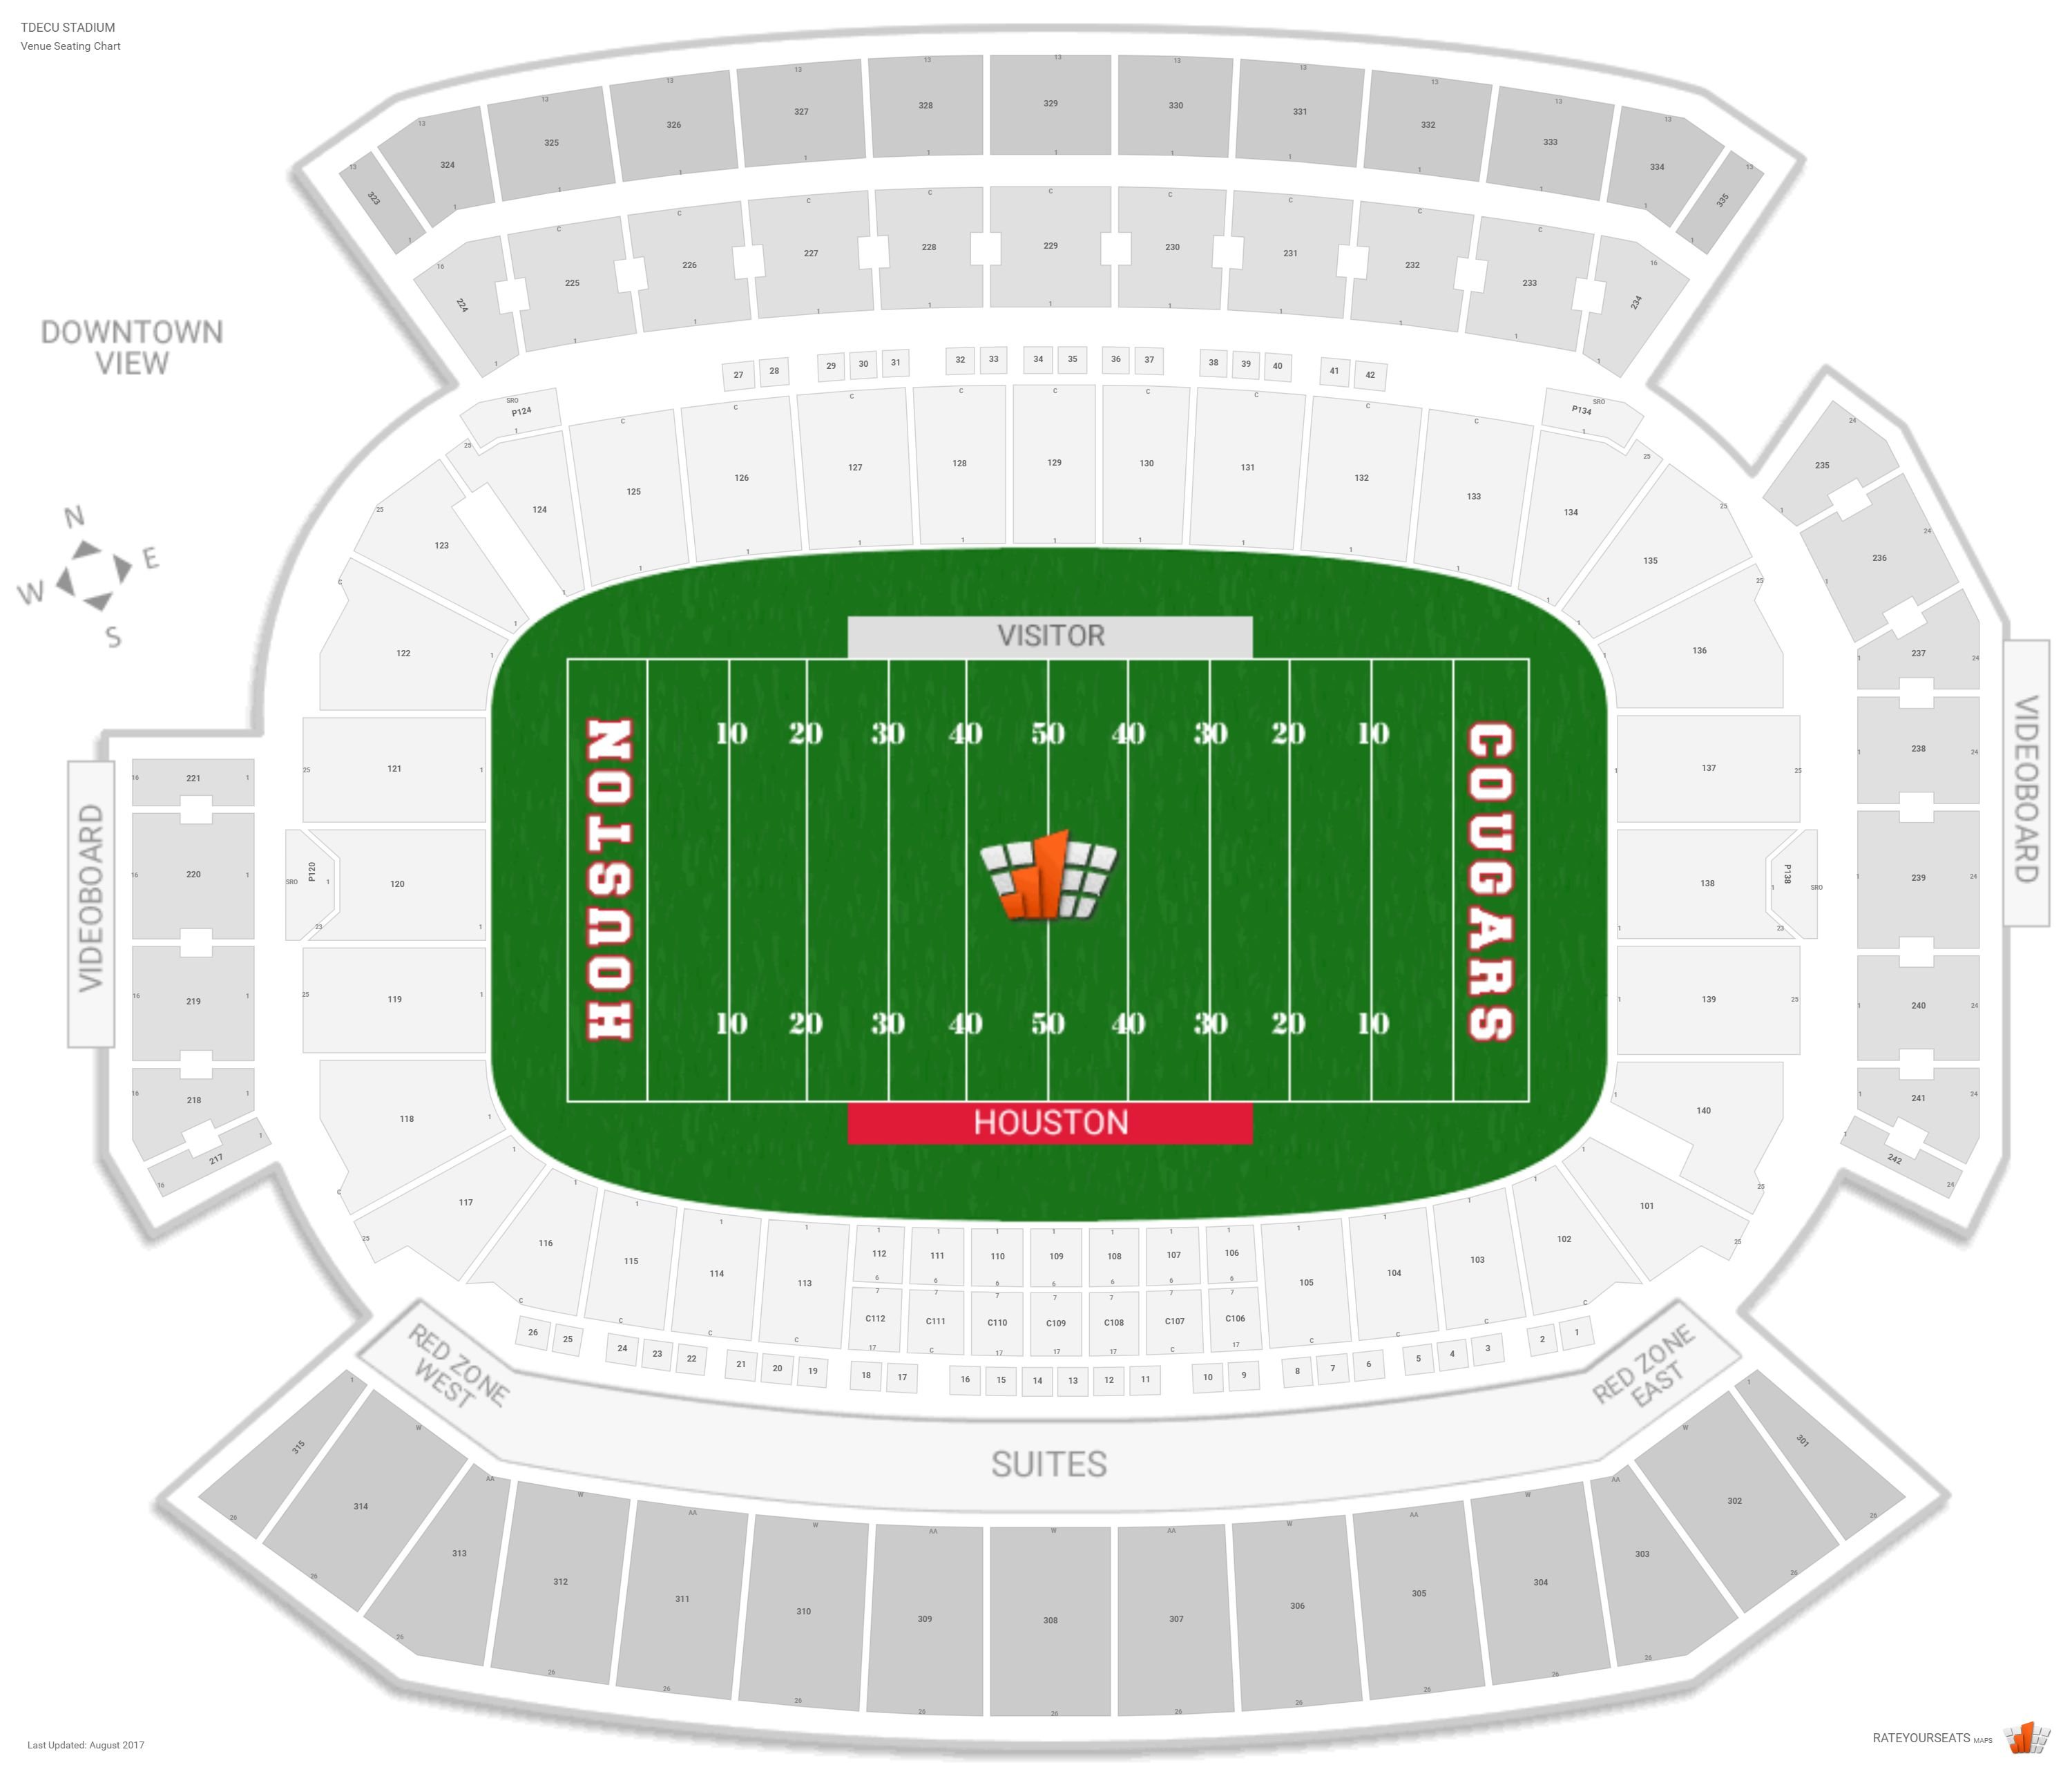 TDECU Stadium (Houston) Seating Guide - RateYourSeats.com